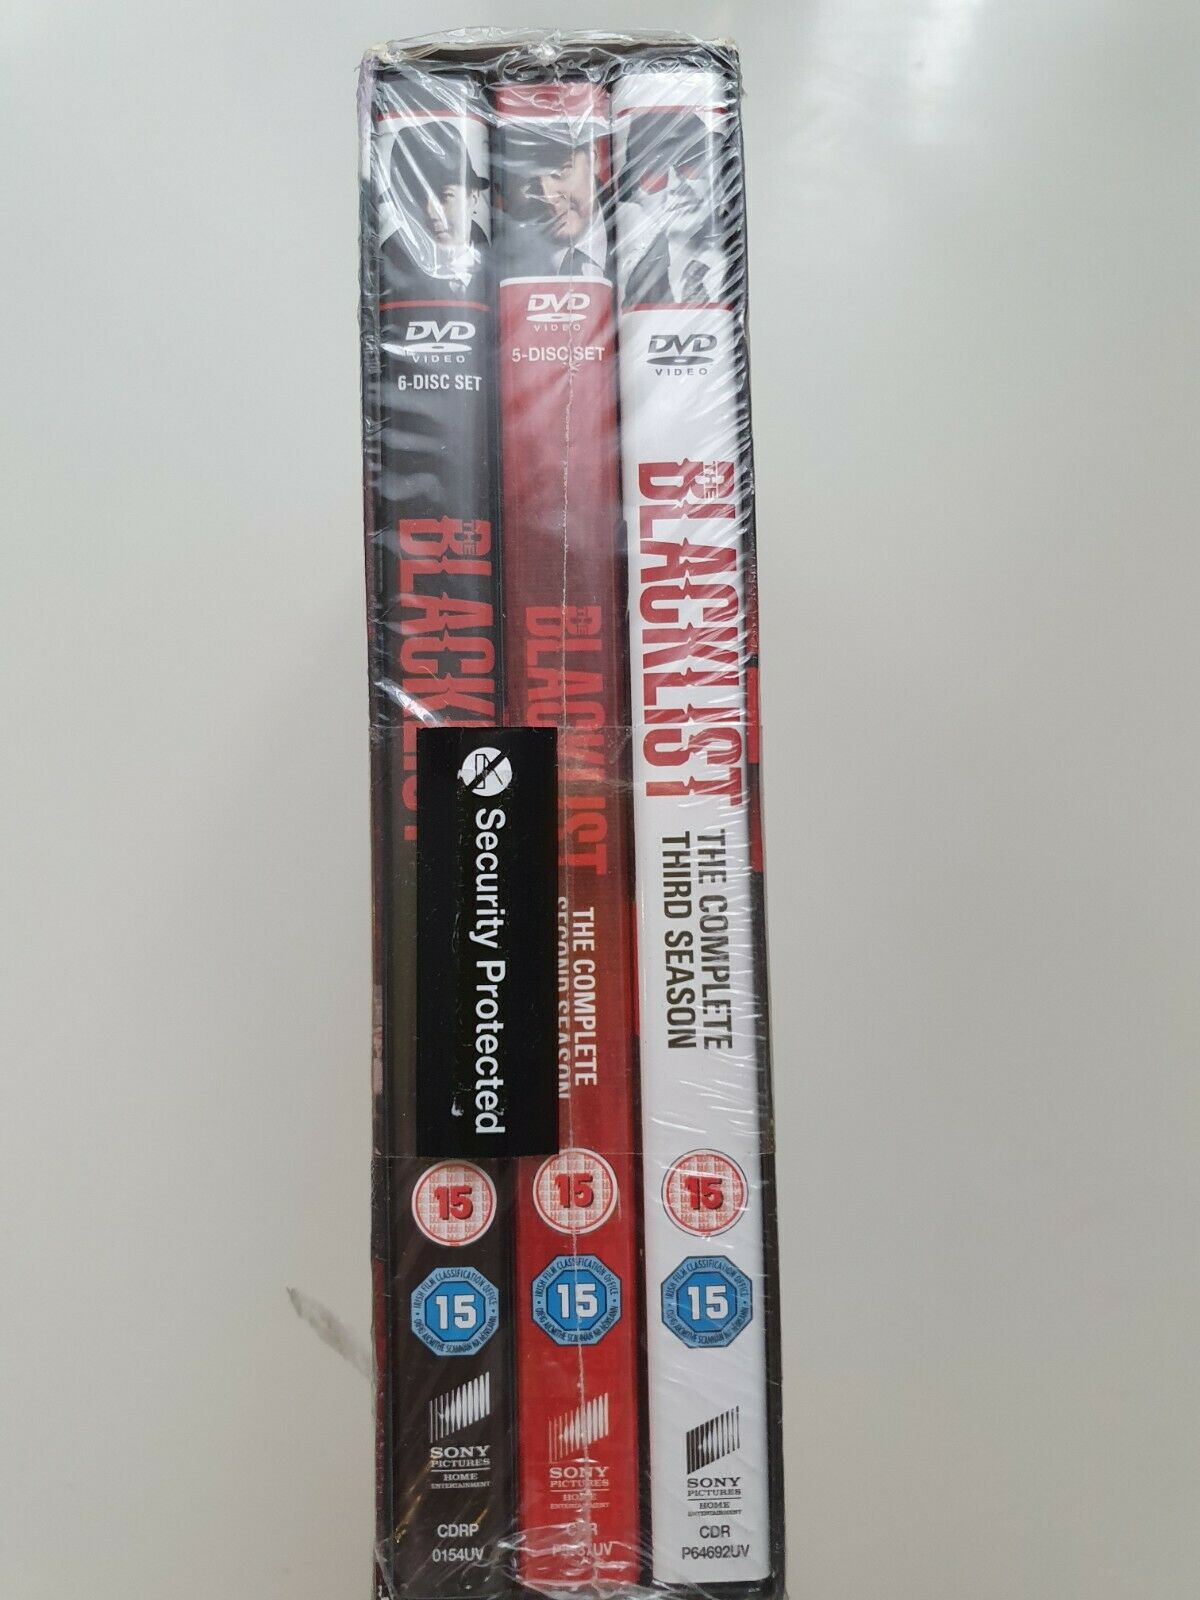 5035822896536 The Blacklist - The Complete Season 1, 2, 3 DVD + UV 2016 BOX SET NEW SEALED